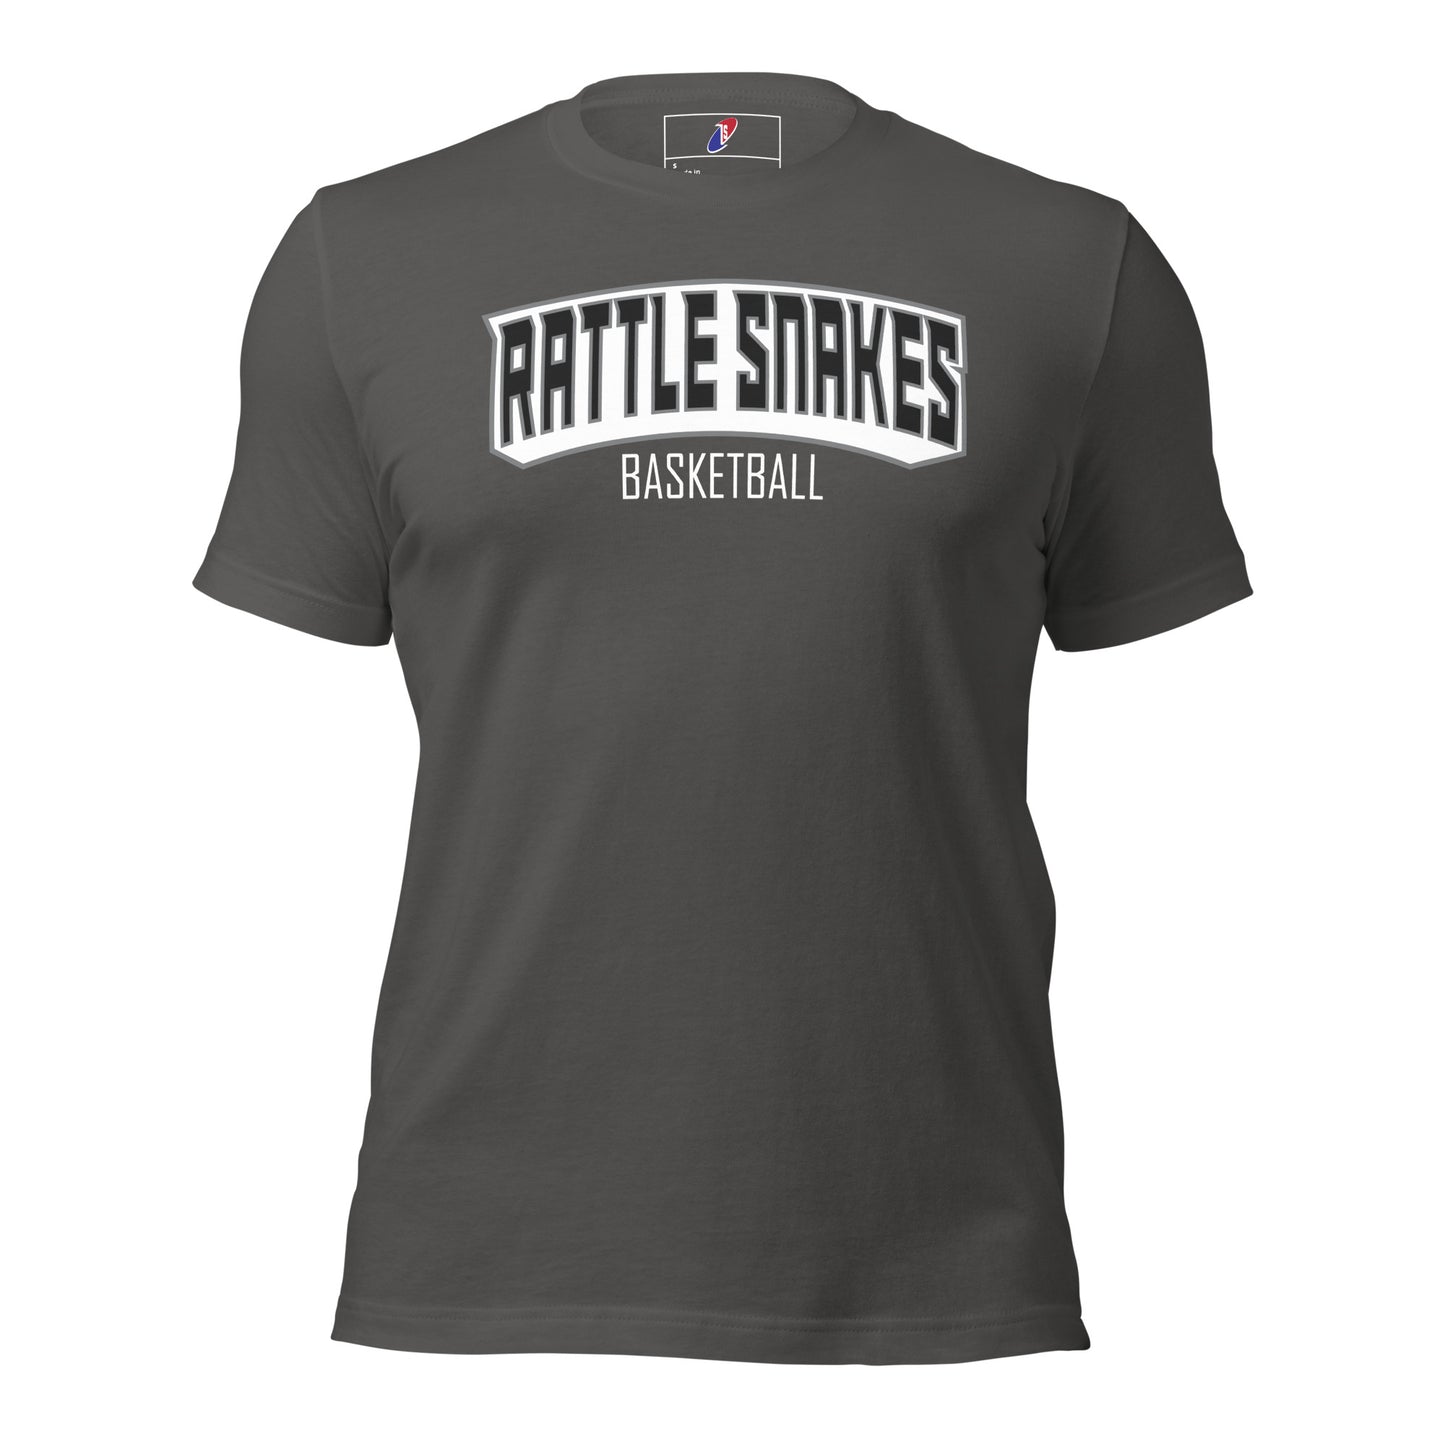 Rattle Snakes Basketball Unisex t-shirt